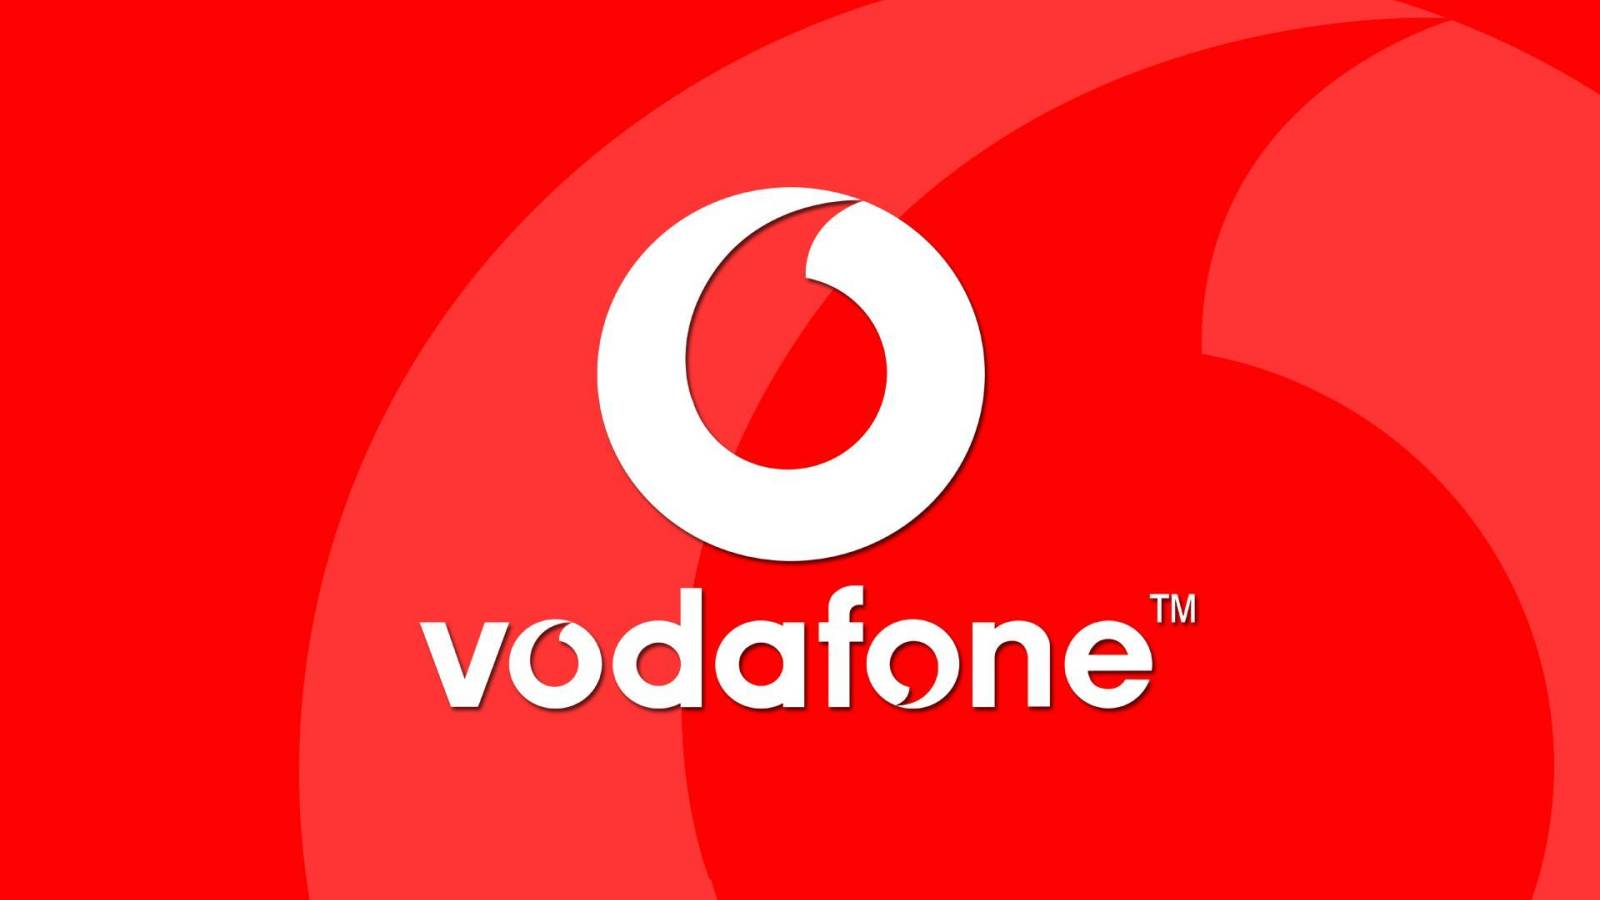 Vodafone tdc